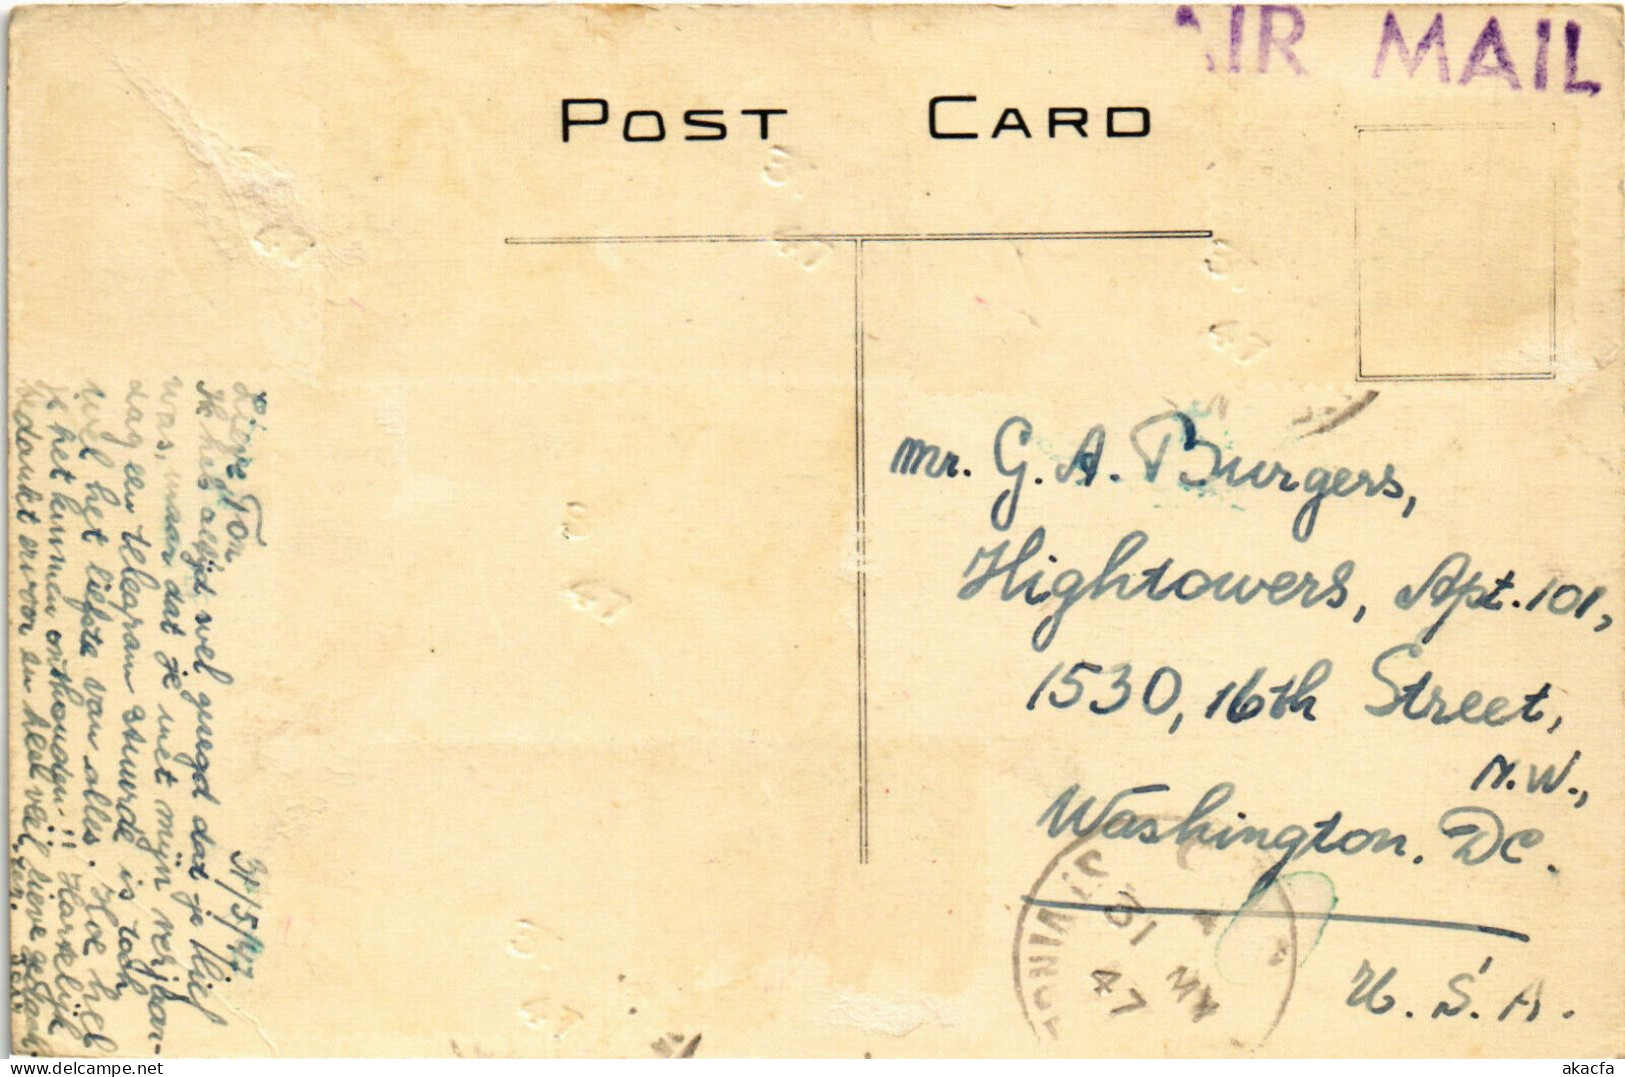 PC VIRGIN ISLANDS ST. VINCENT KINGSTOWN GENERAL VIEW Vintage Postcard (b52252) - Britse Maagdeneilanden